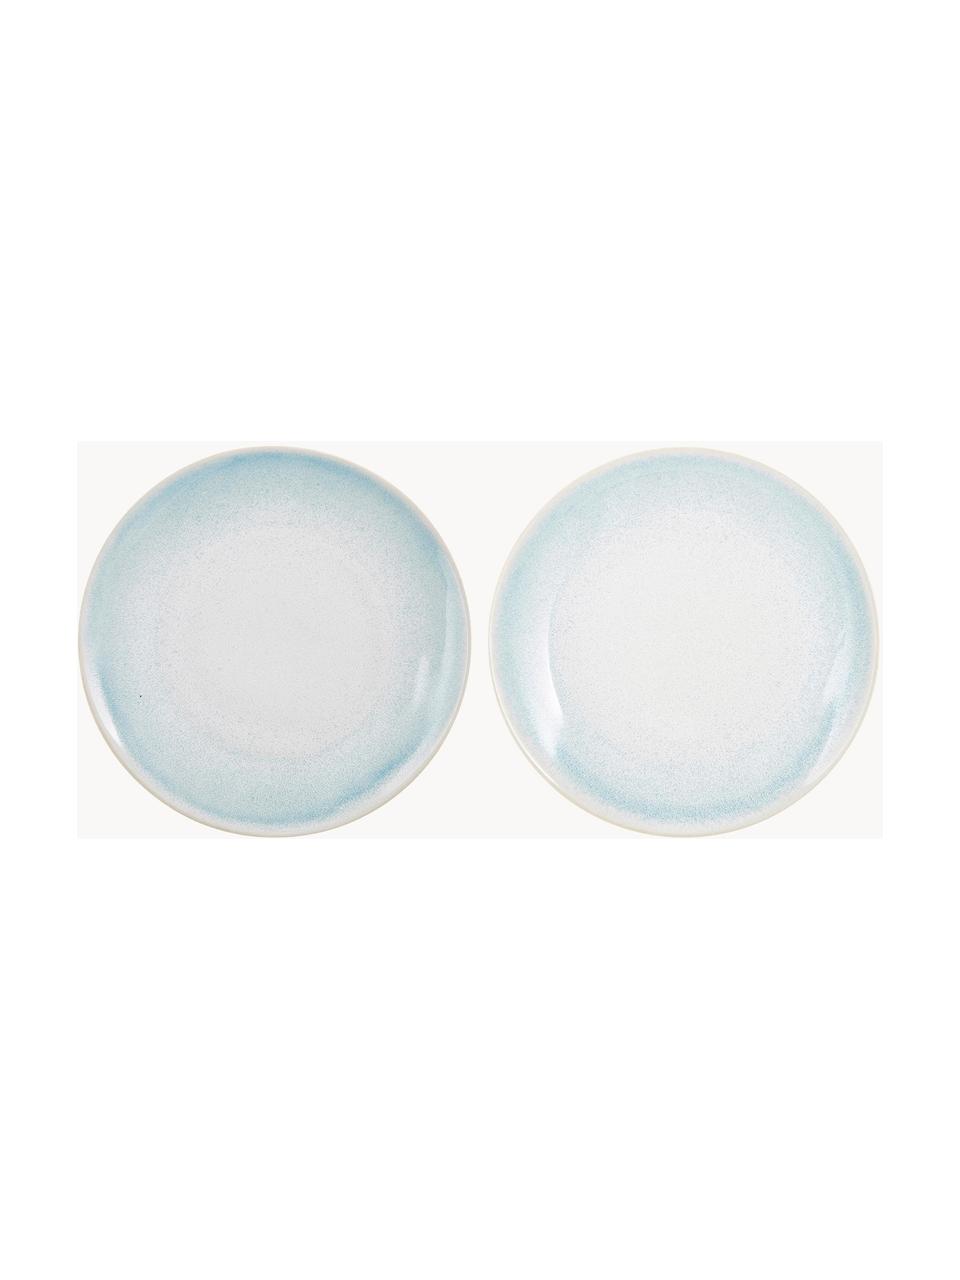 Platos postre artesanales Amalia, 2 uds., Cerámica, Azul claro, blanco crema, Ø 20 cm